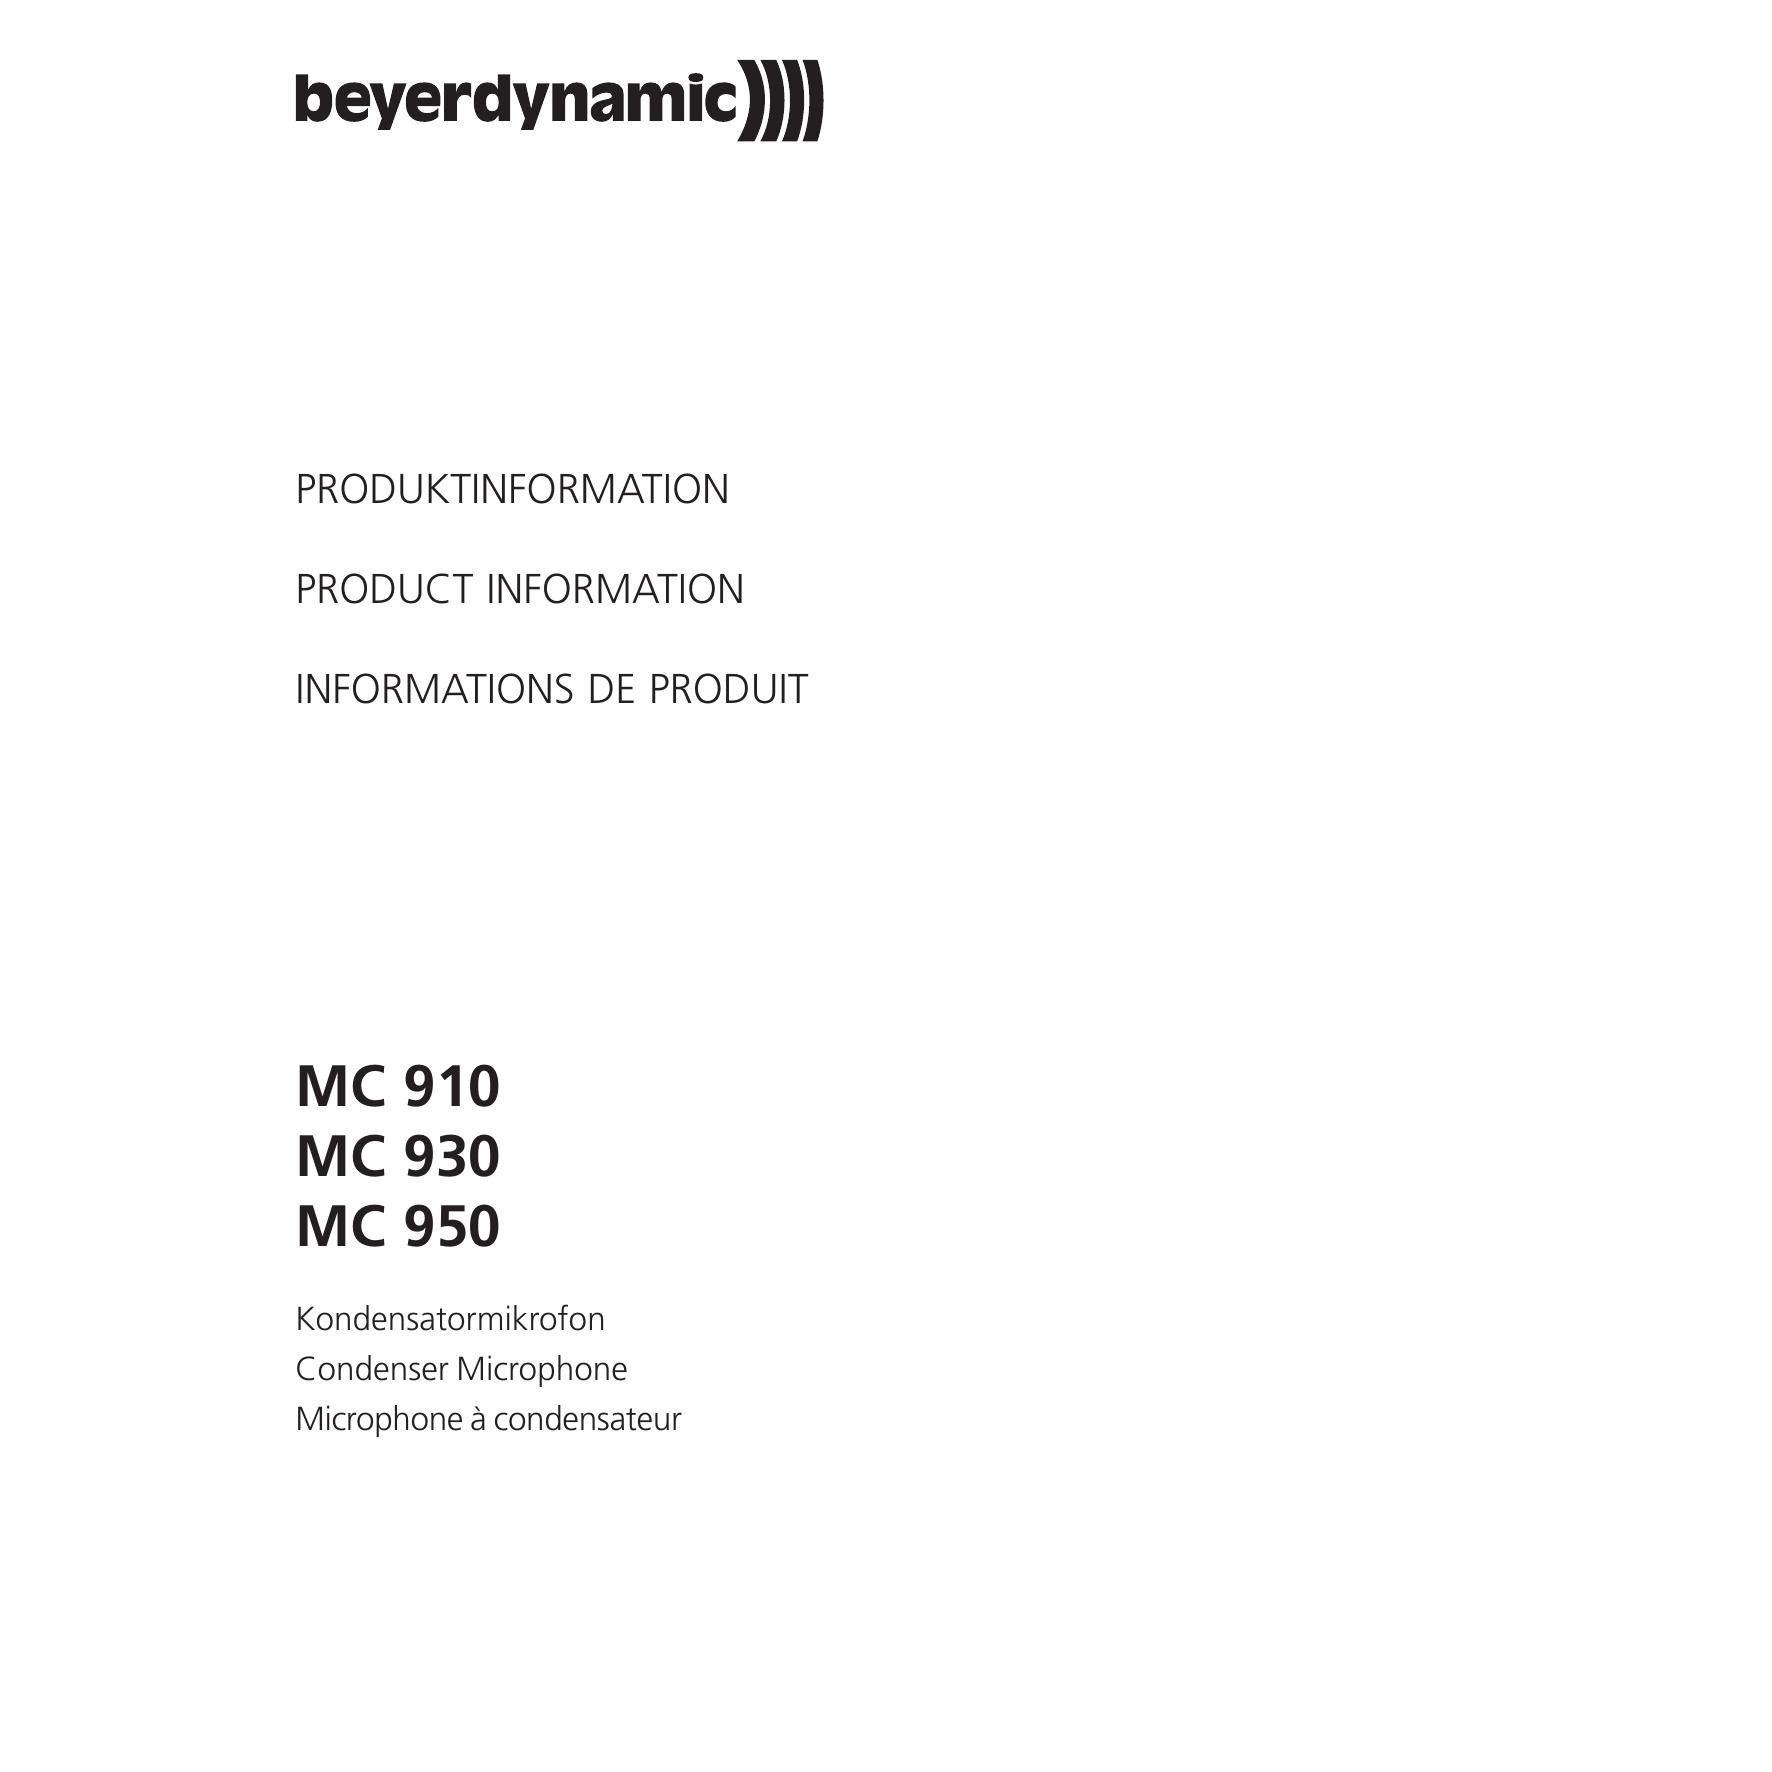 Beyerdynamic MC 950 Microphone User Manual